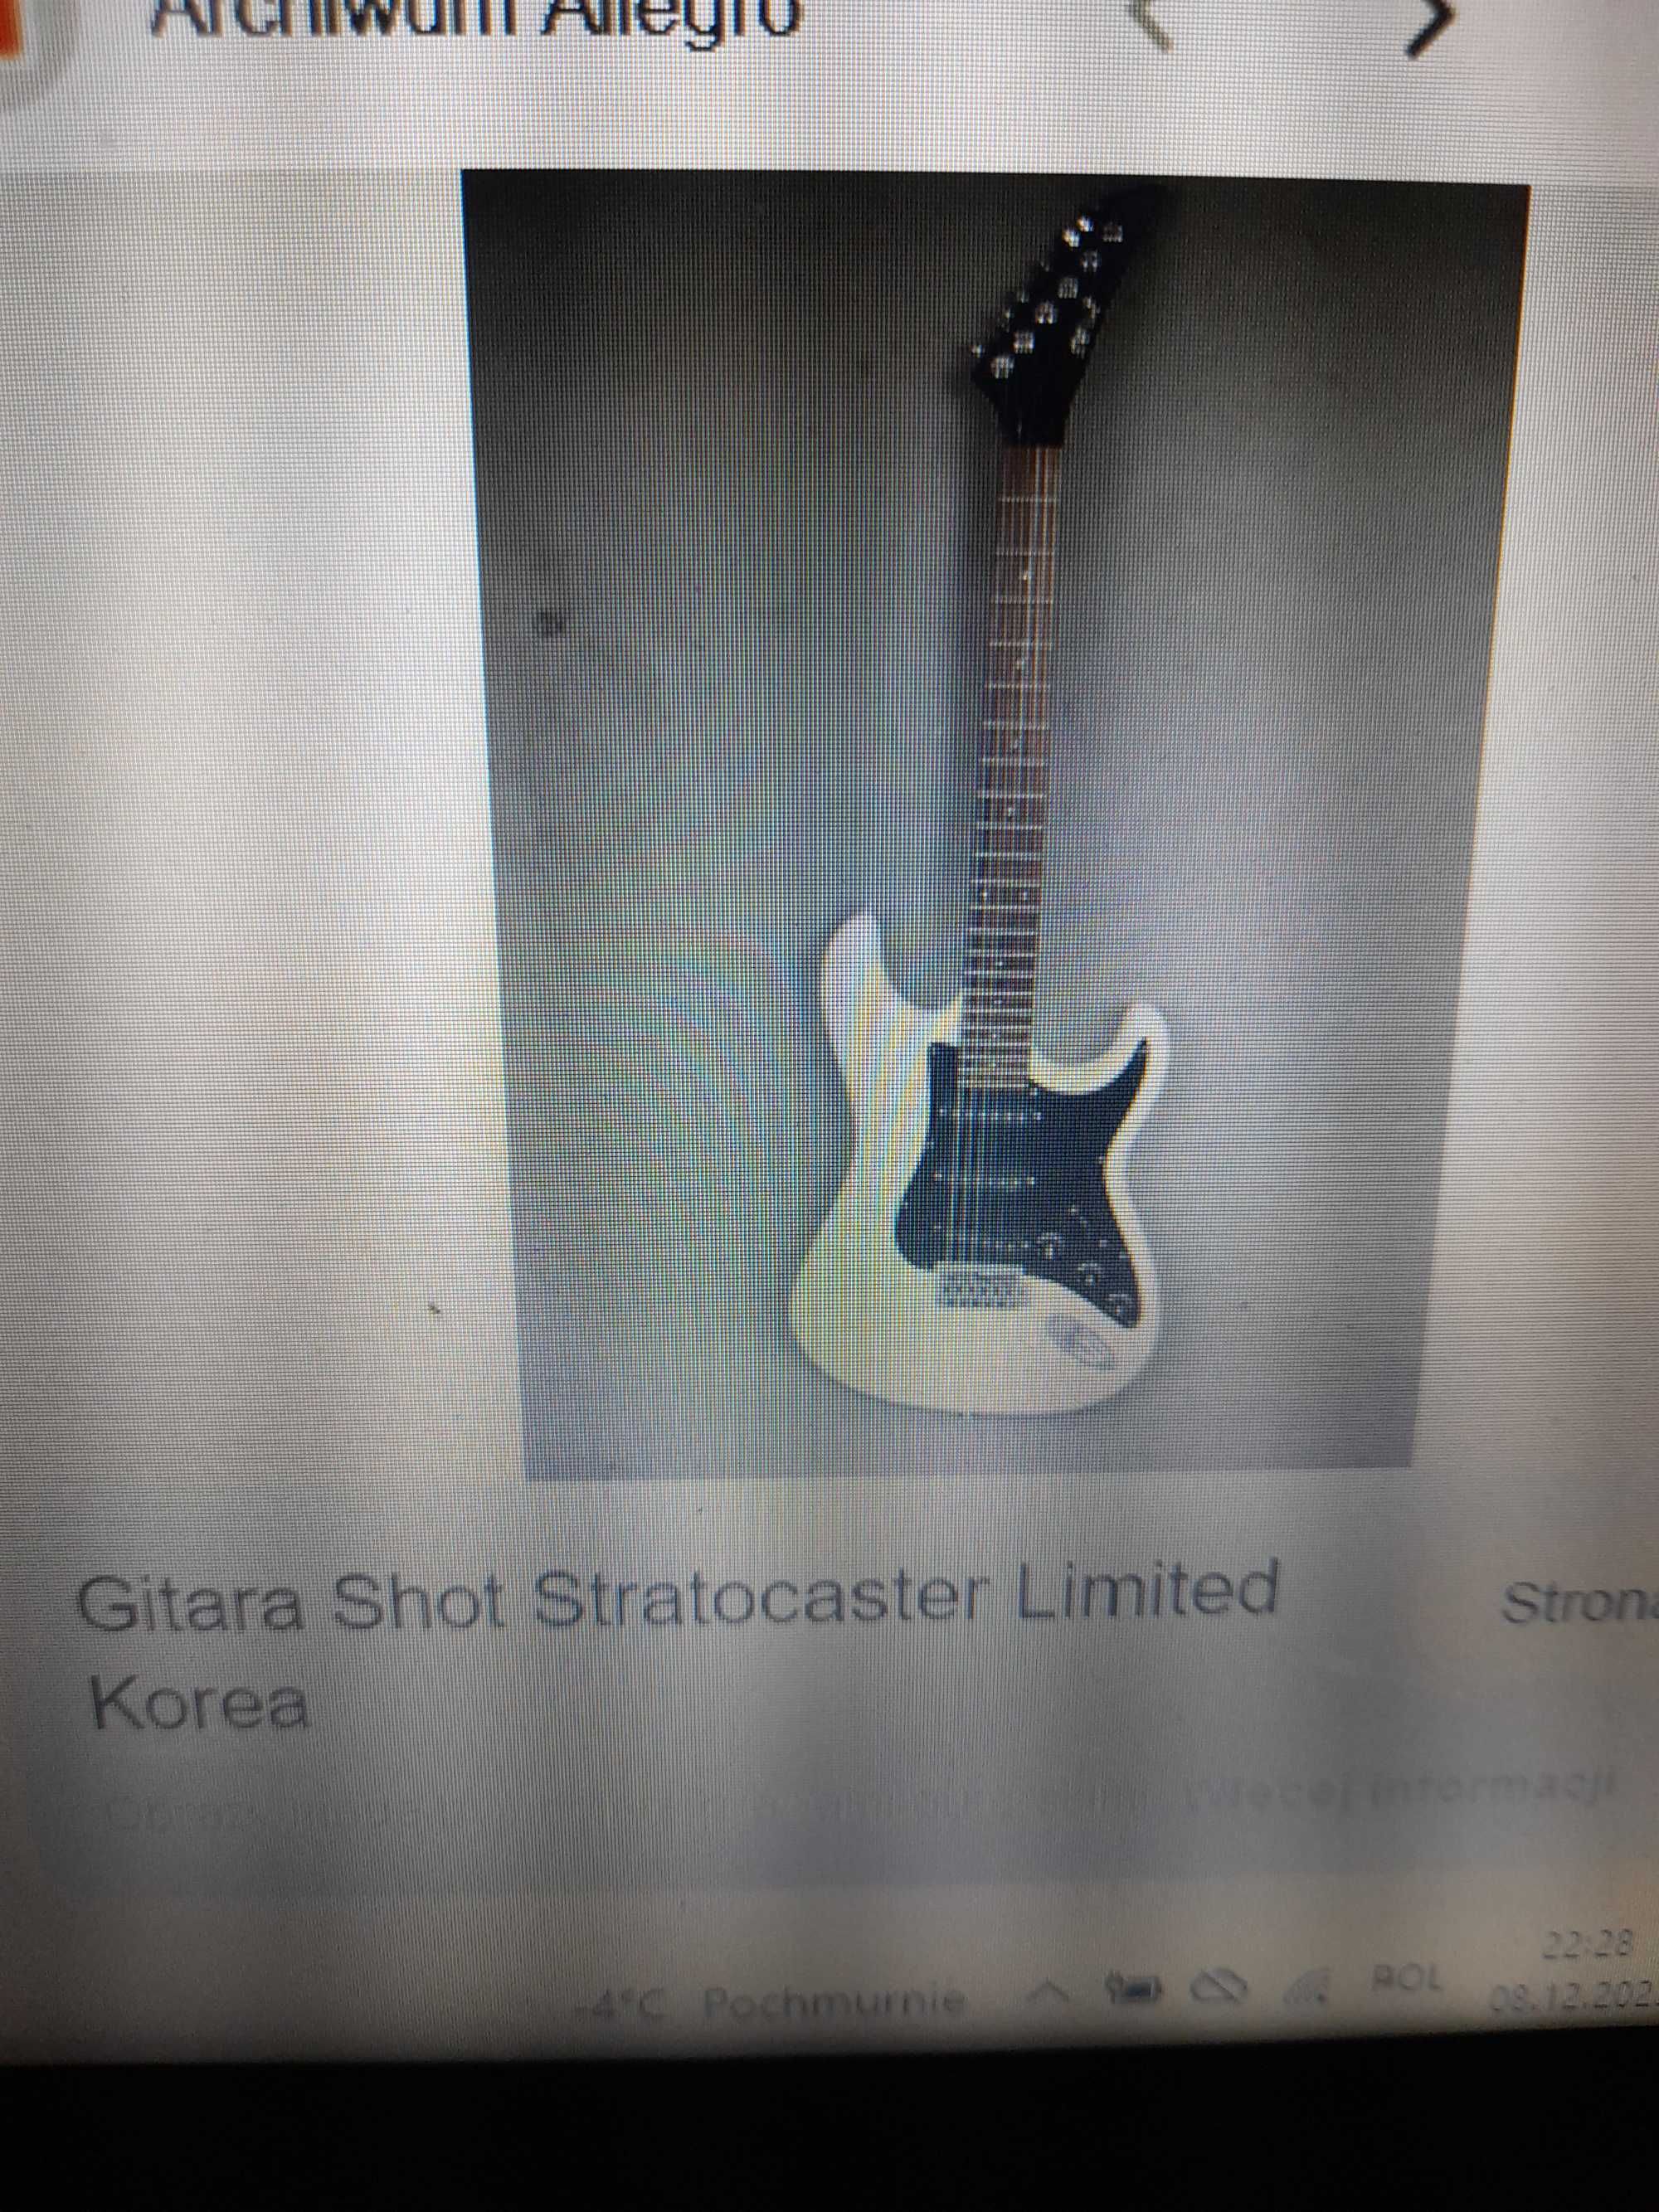 Sprzedam Gitare SHOT Korea Super Strat